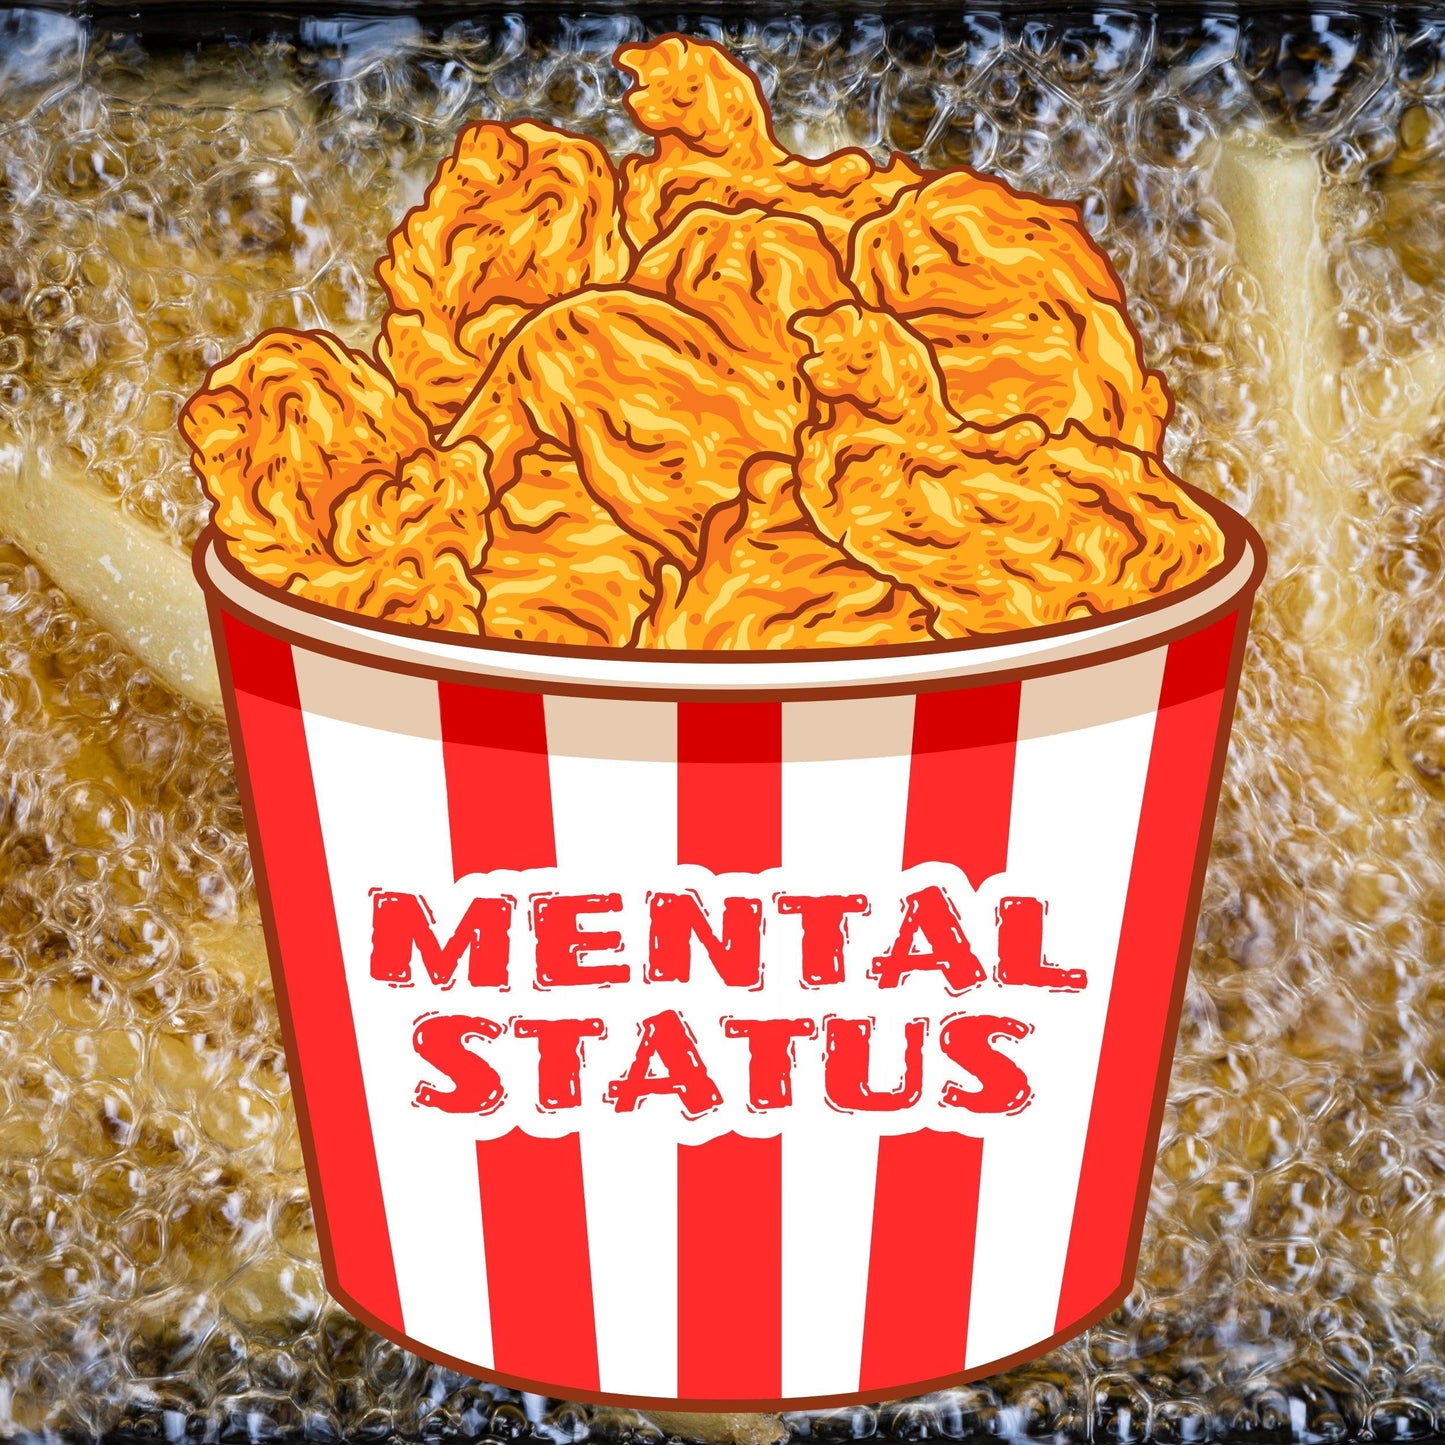 mental status: fried [t-shirt] - ovrsze